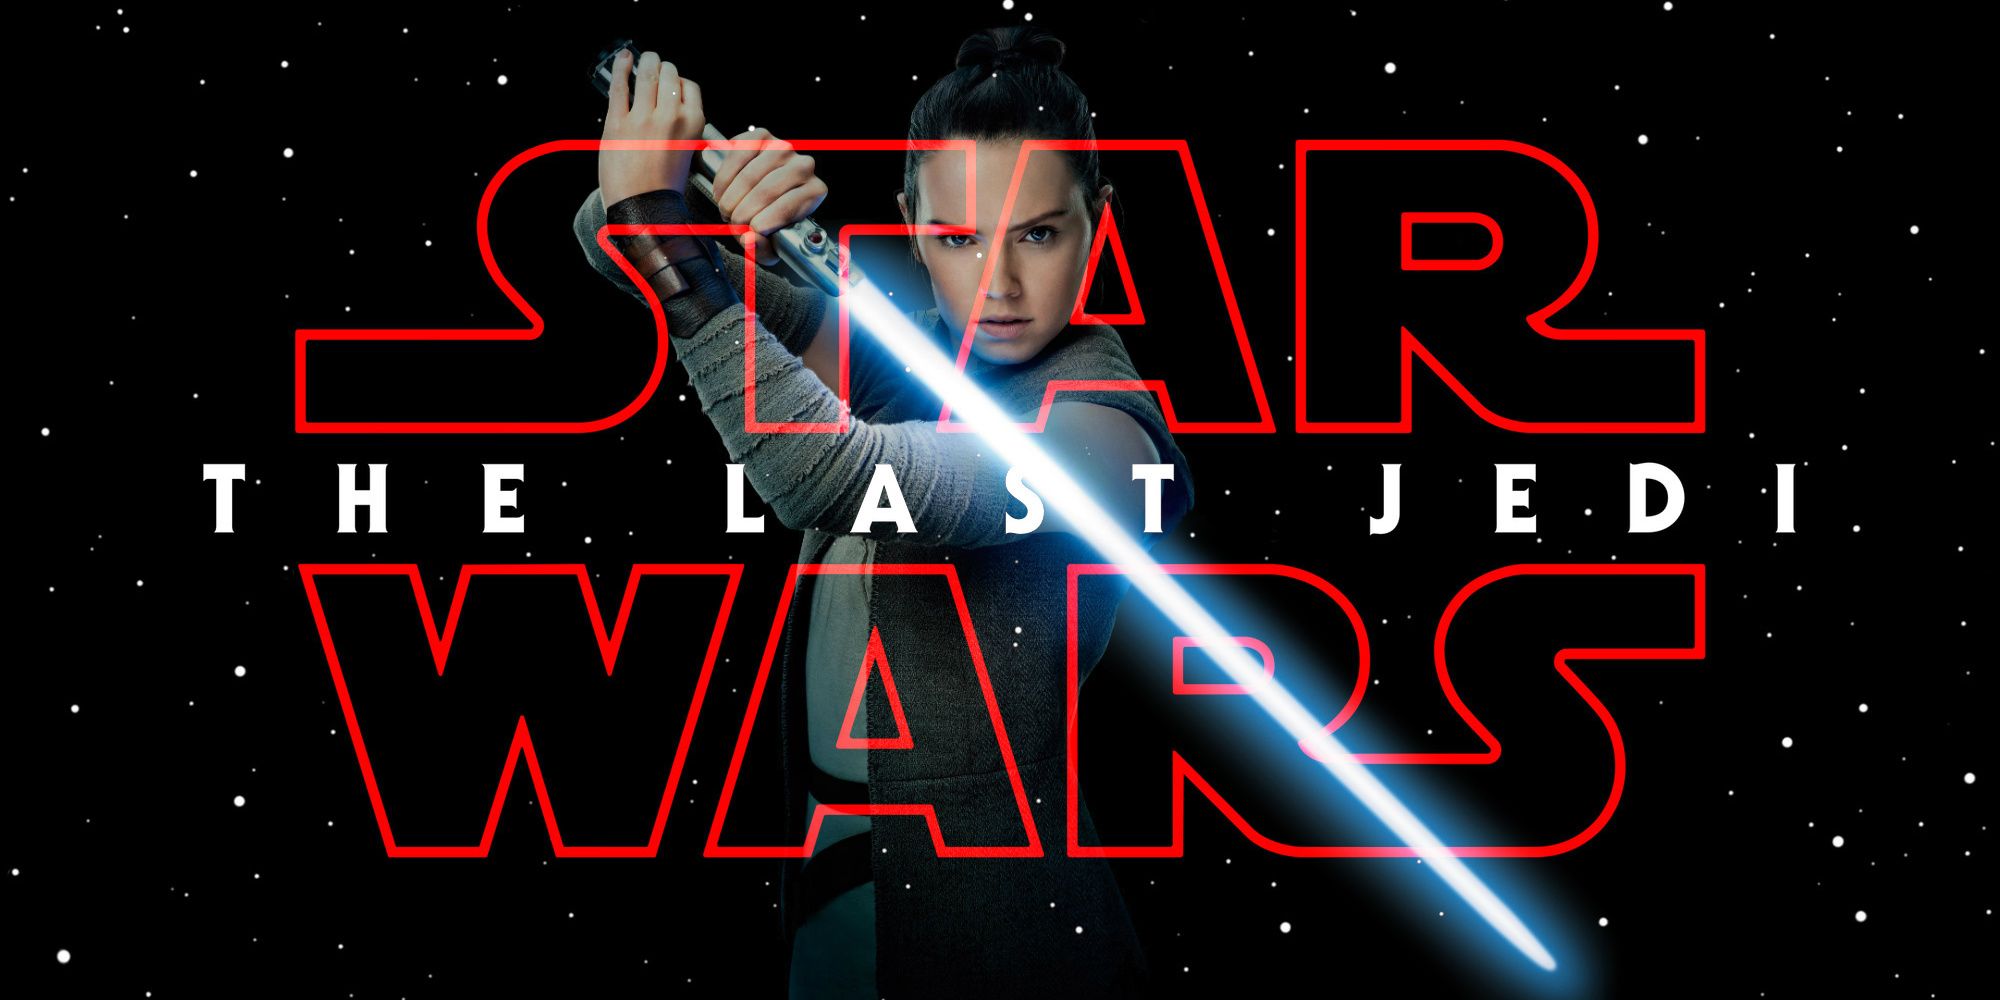 Star Wars: The Last Jedi' tops $1 billion worldwide